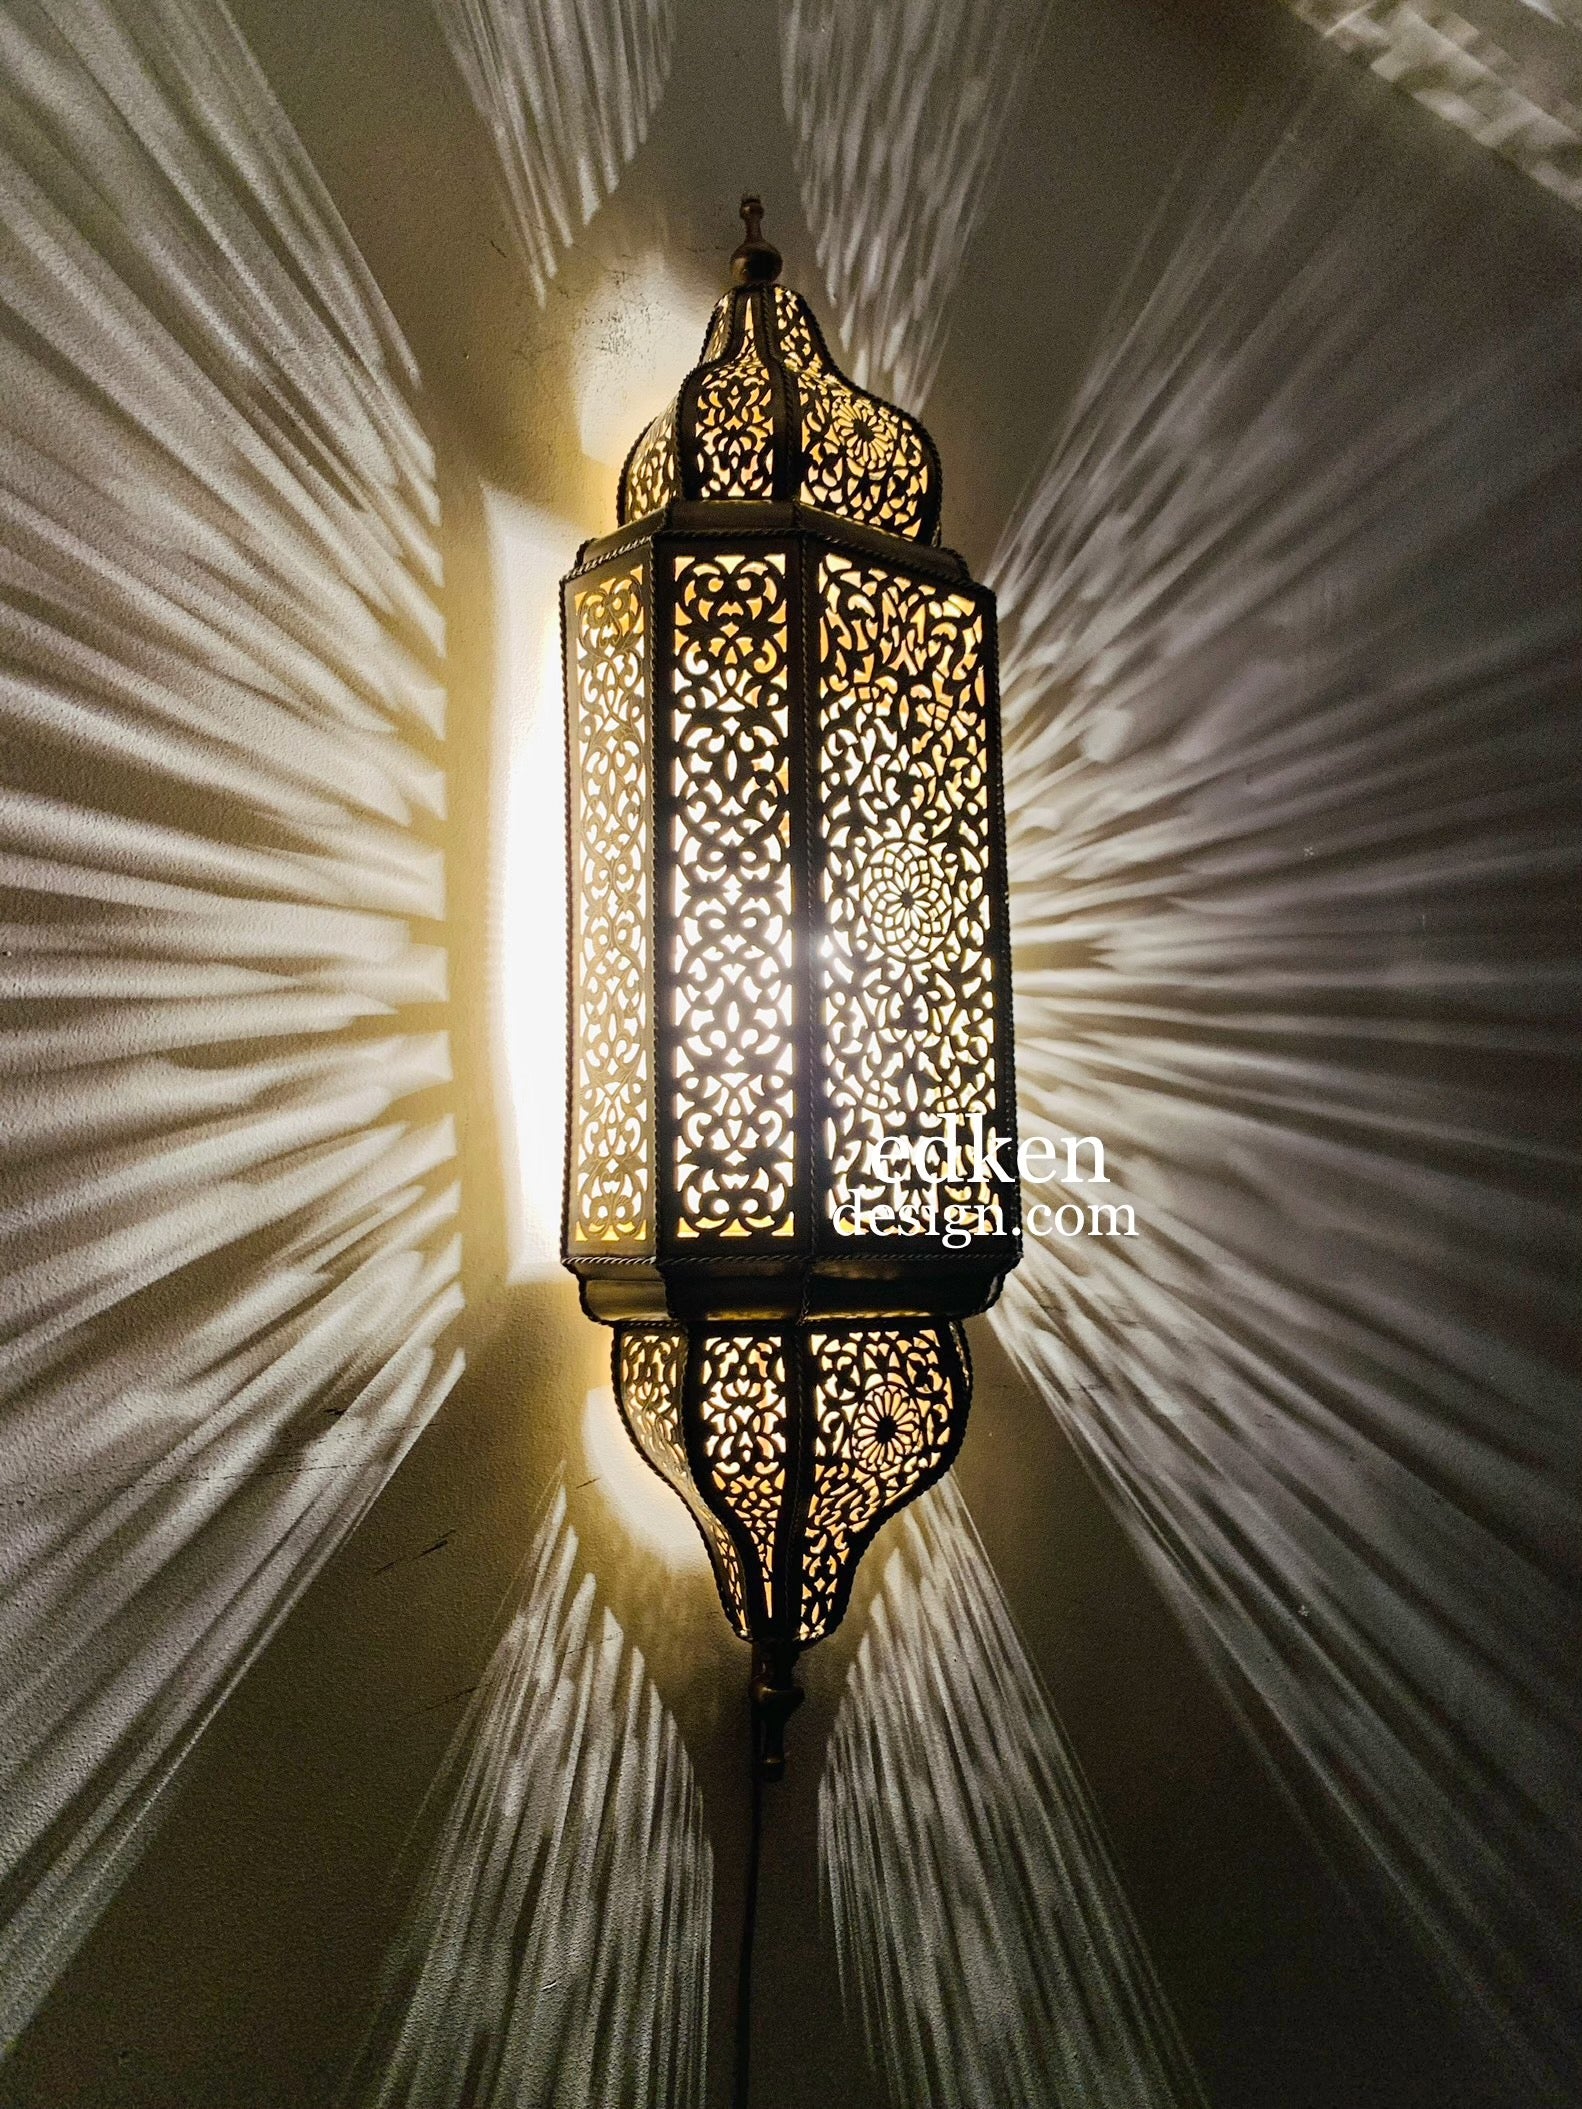 EDKEN LIGHTS - Moroccan Wall Lamps Sconce Fixture Wall Lights Handmade Vintage Home Decor